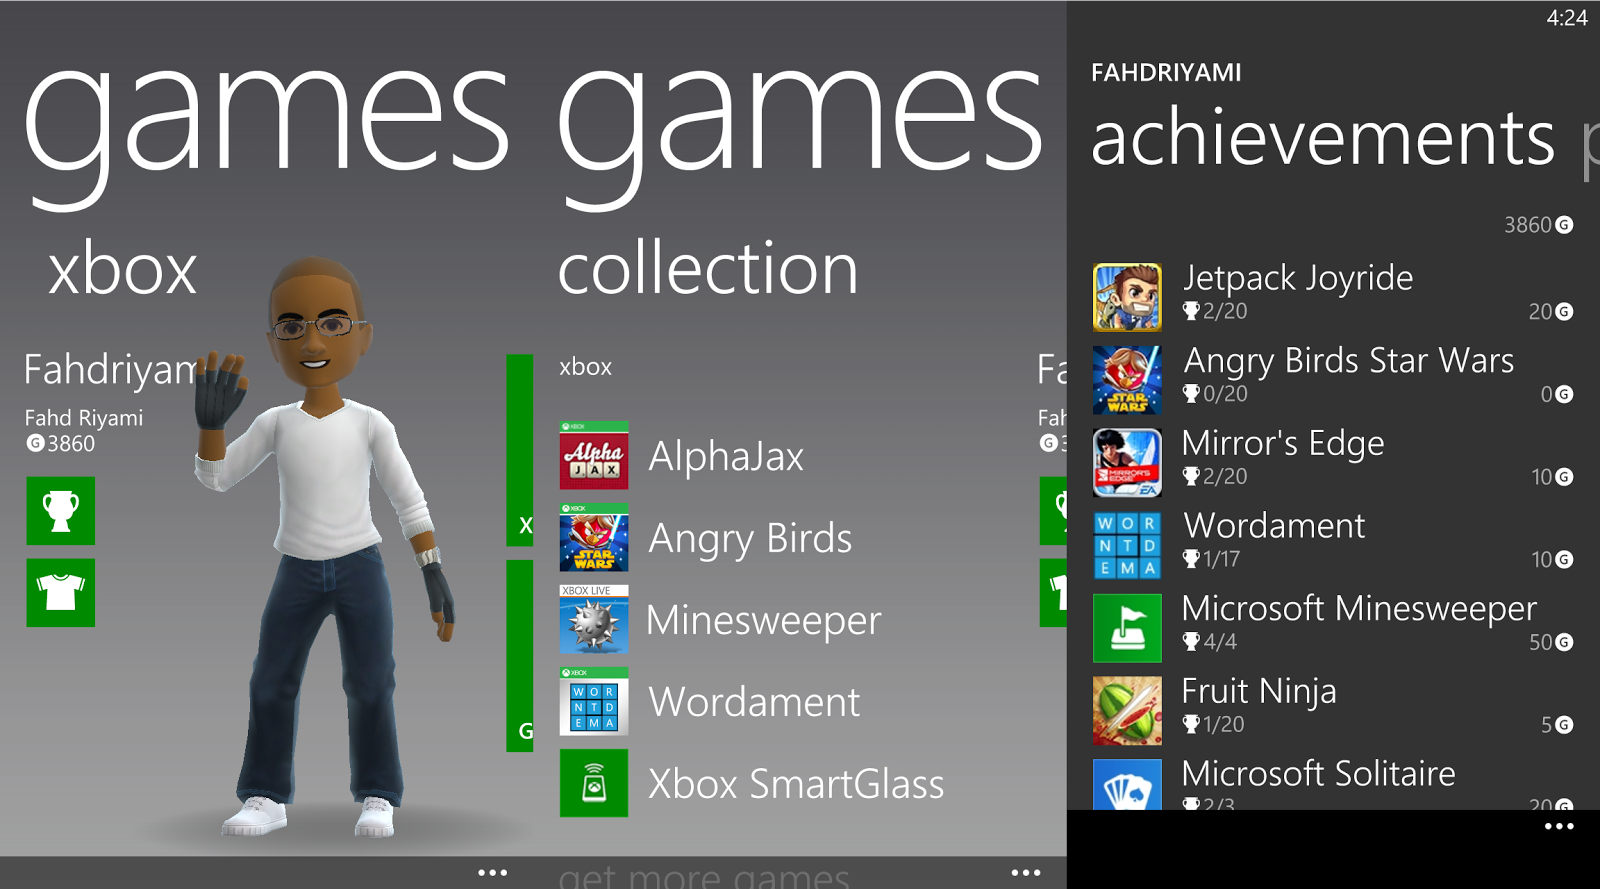 Windows Phone 8 Games hub